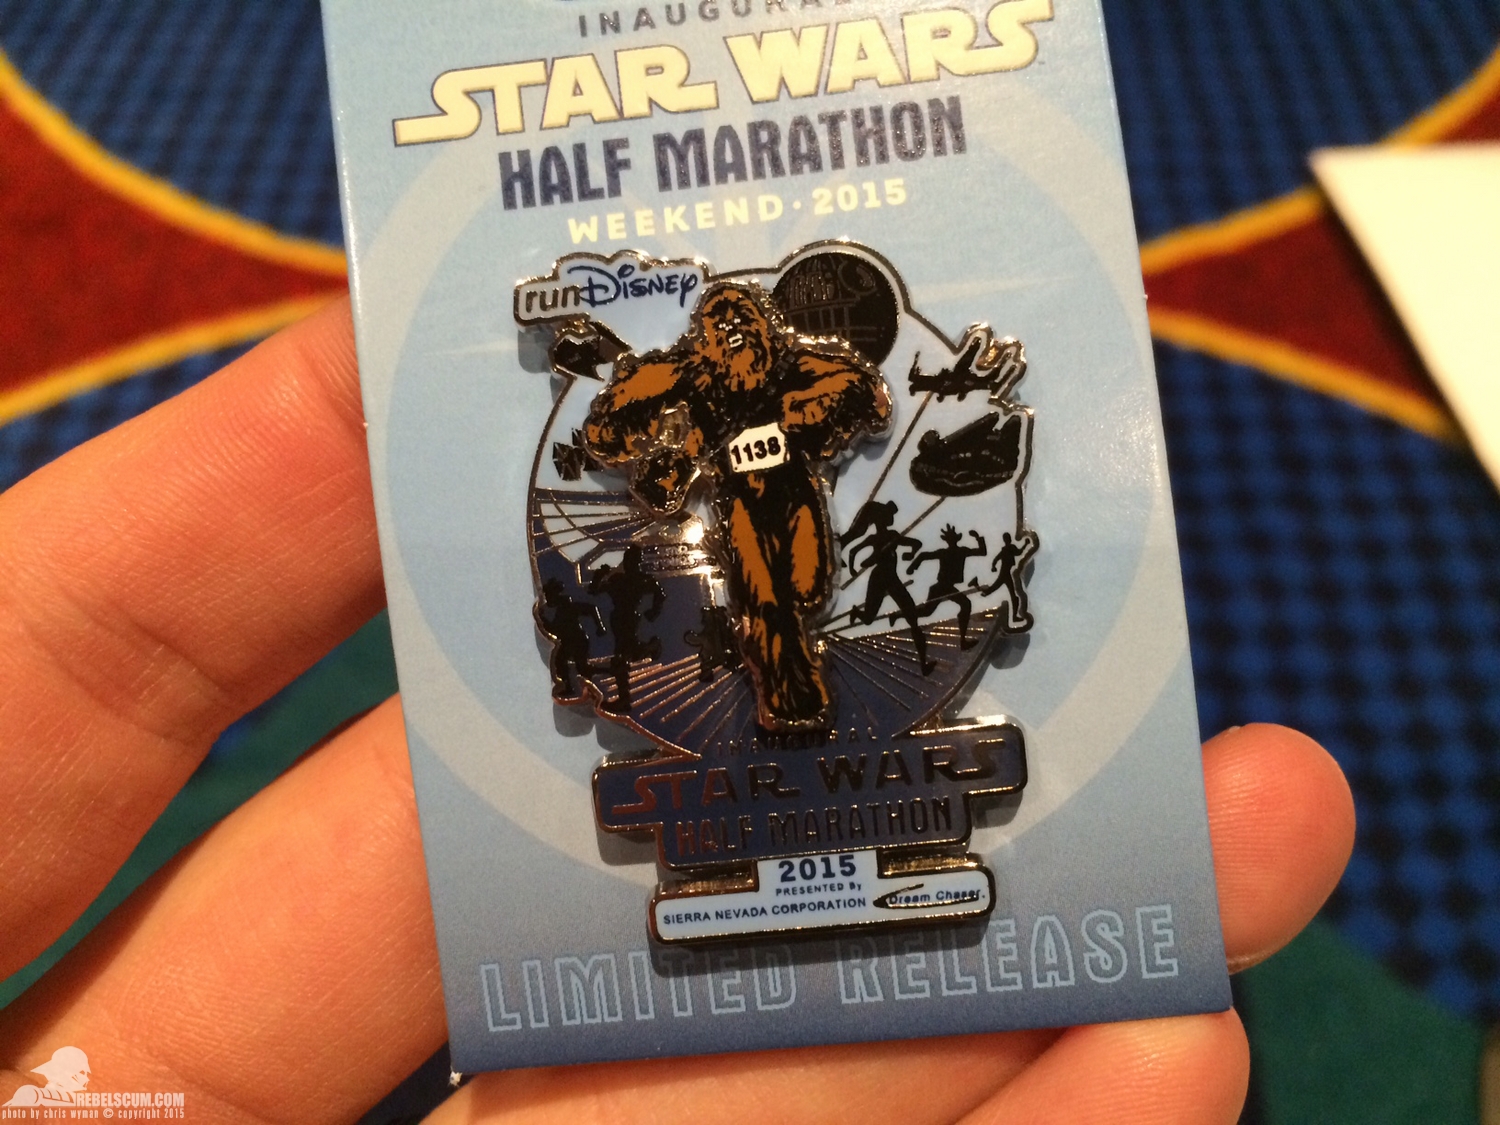 Inaugural-Star-Wars-Half-Marathon-Weekend-January-15-2015-048.jpg